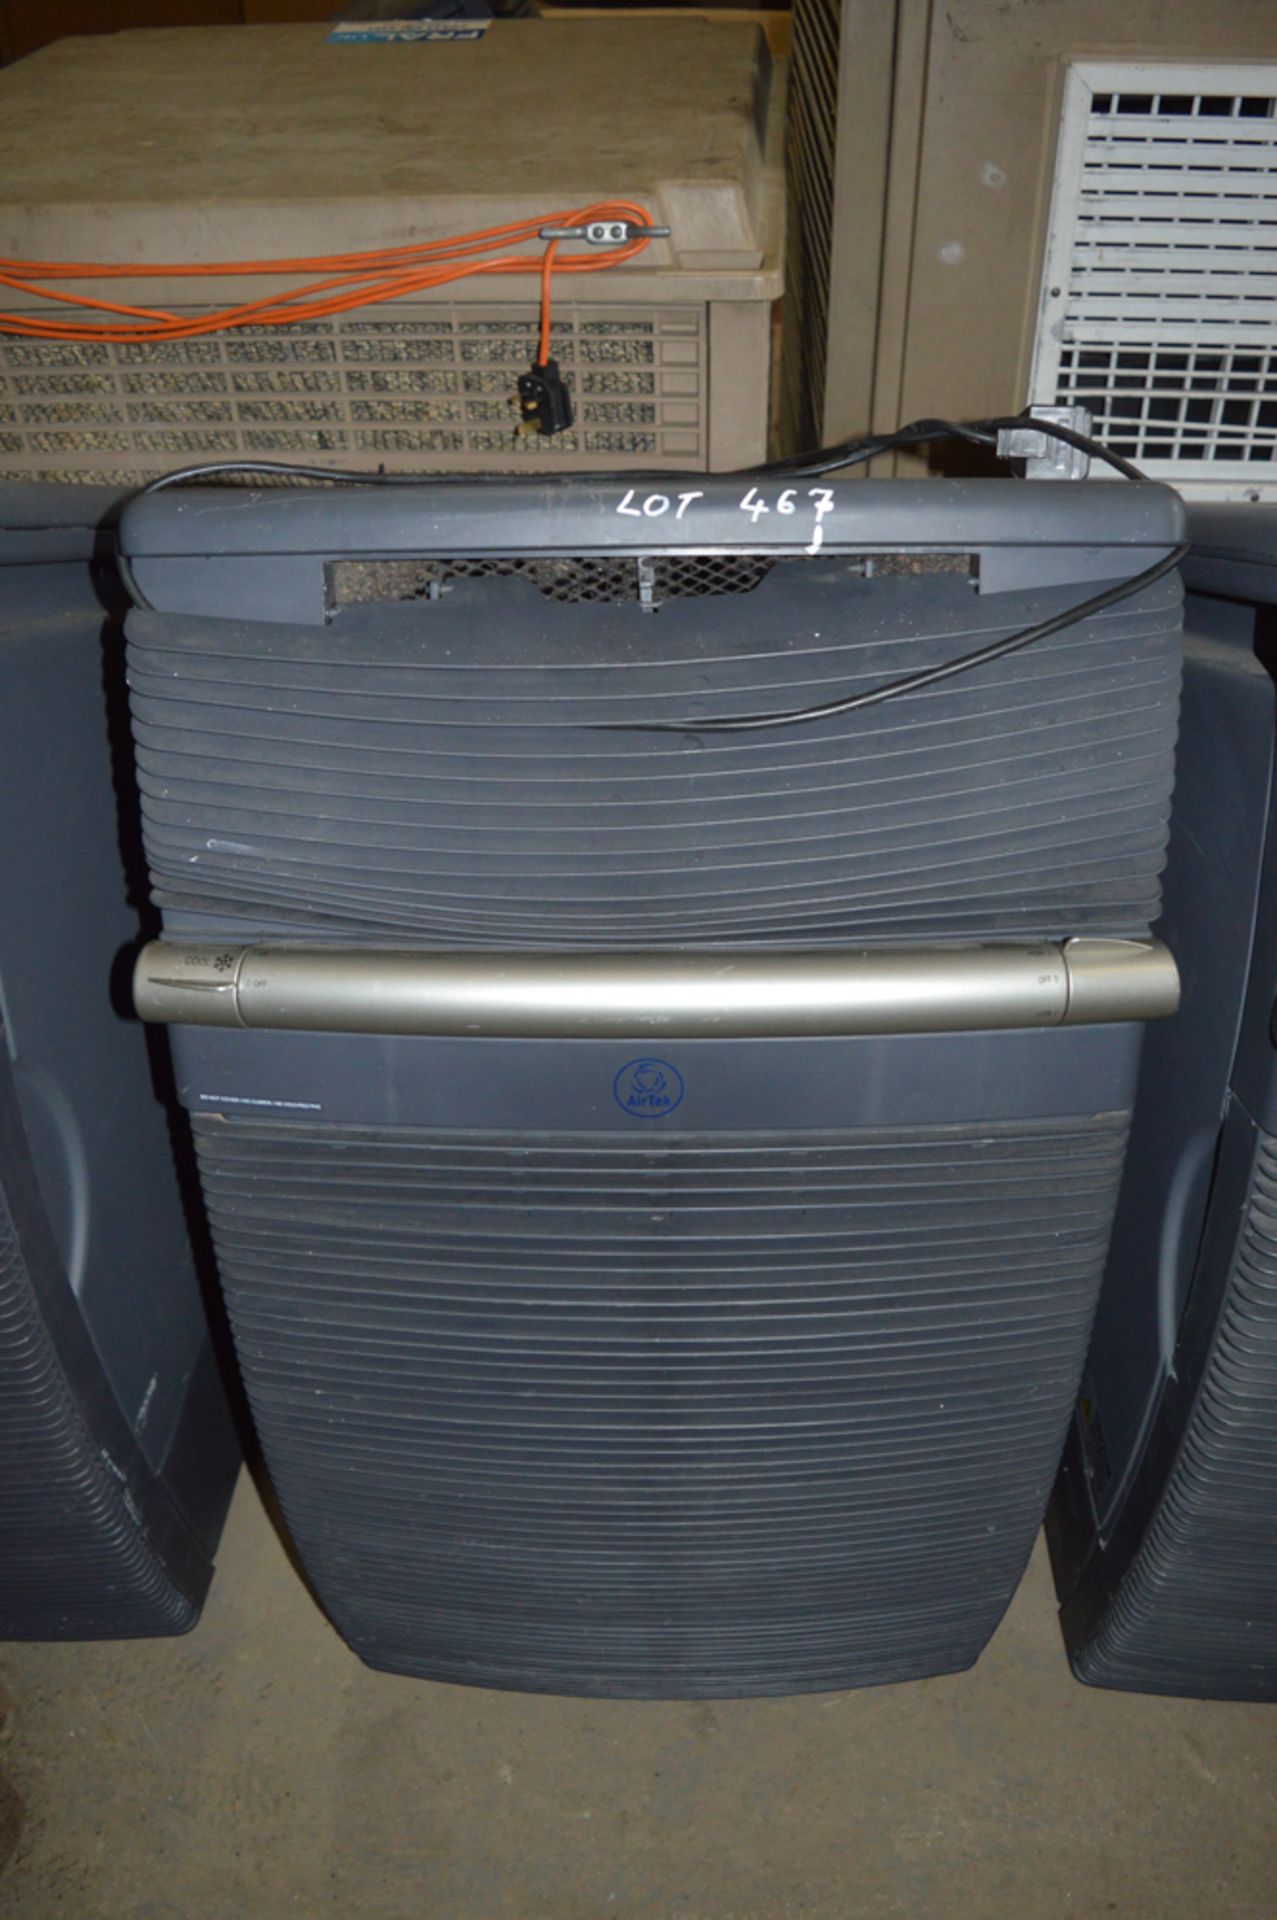 Airtek 240v air conditioning unit